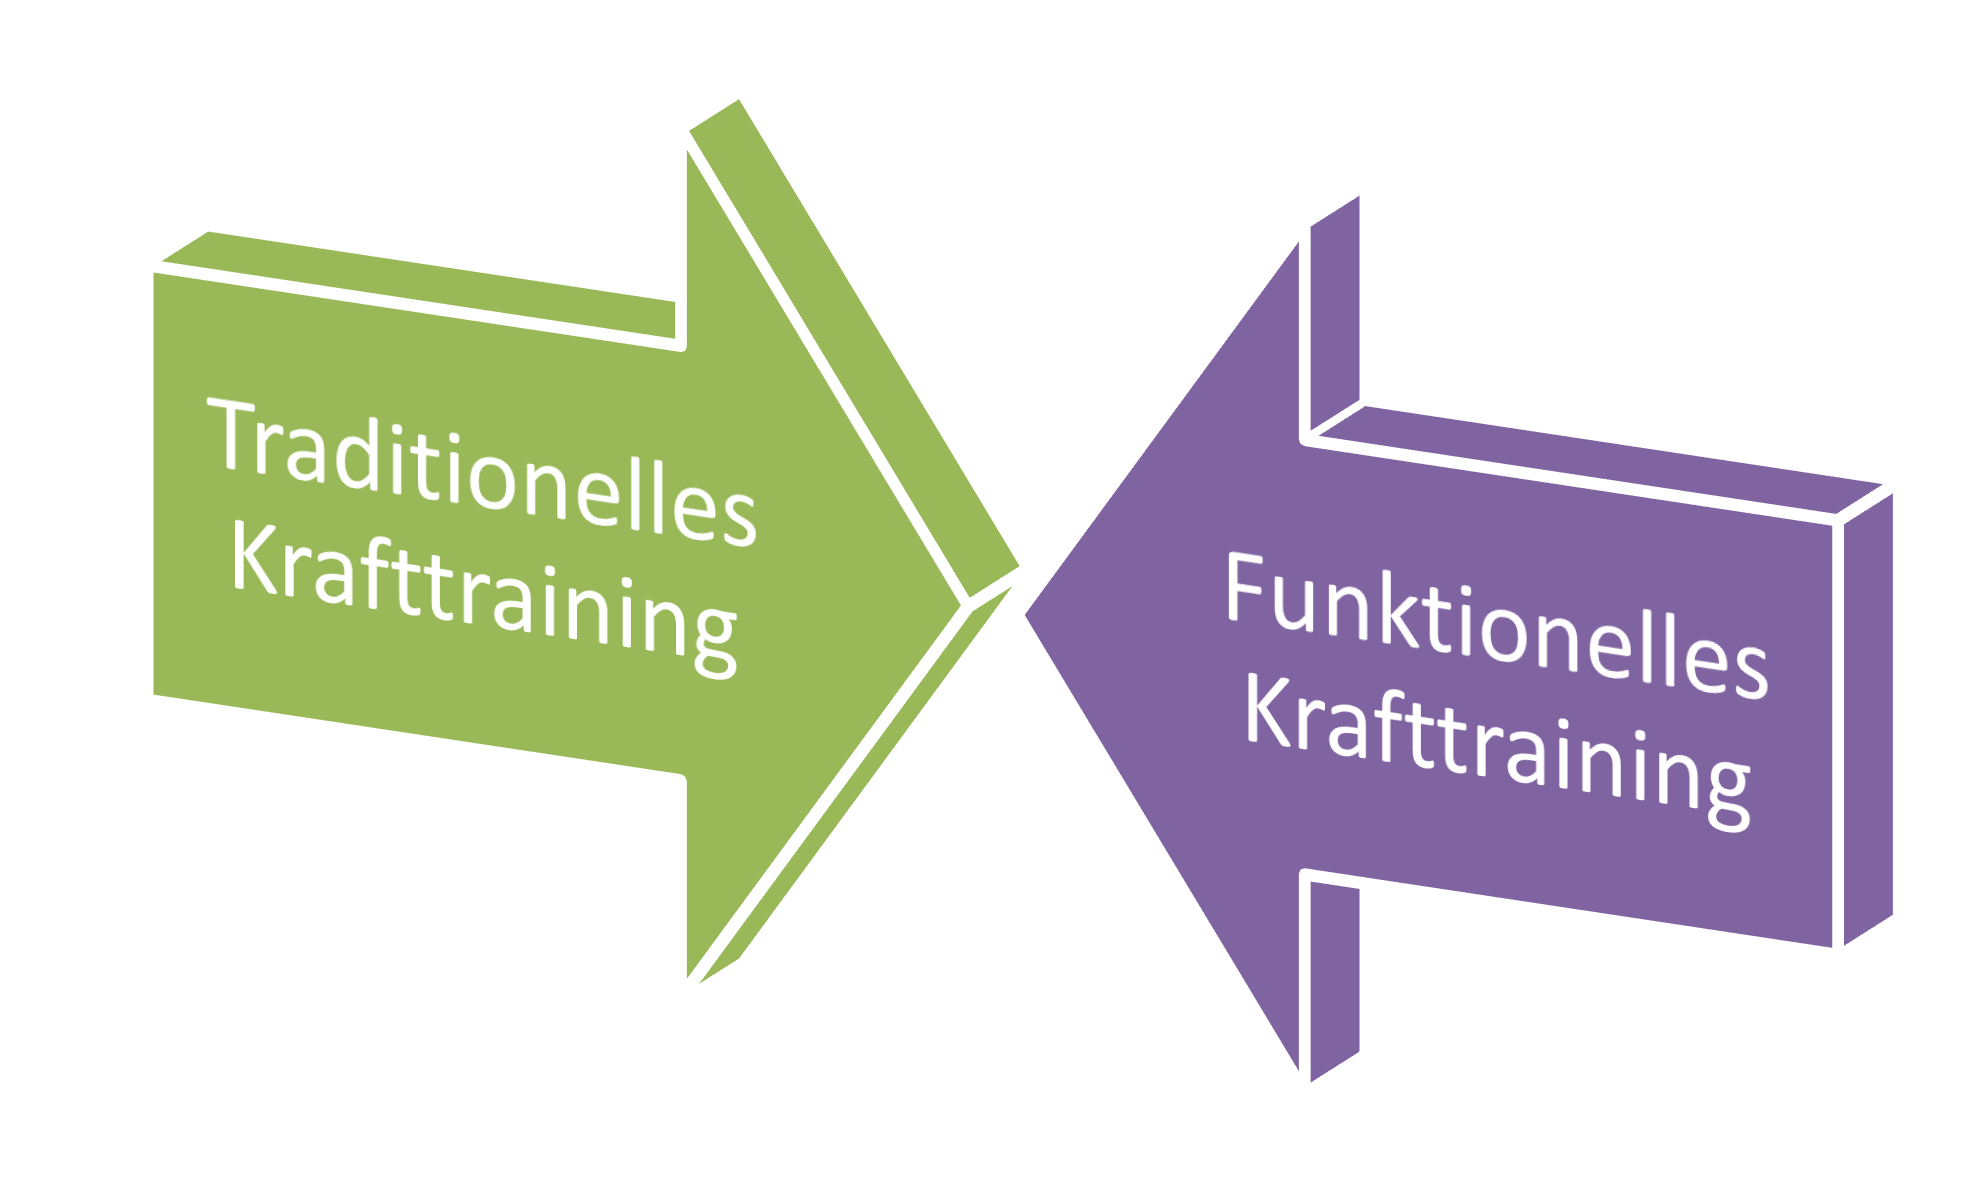 Traditionelles- vs Funktionelles Krafttraining